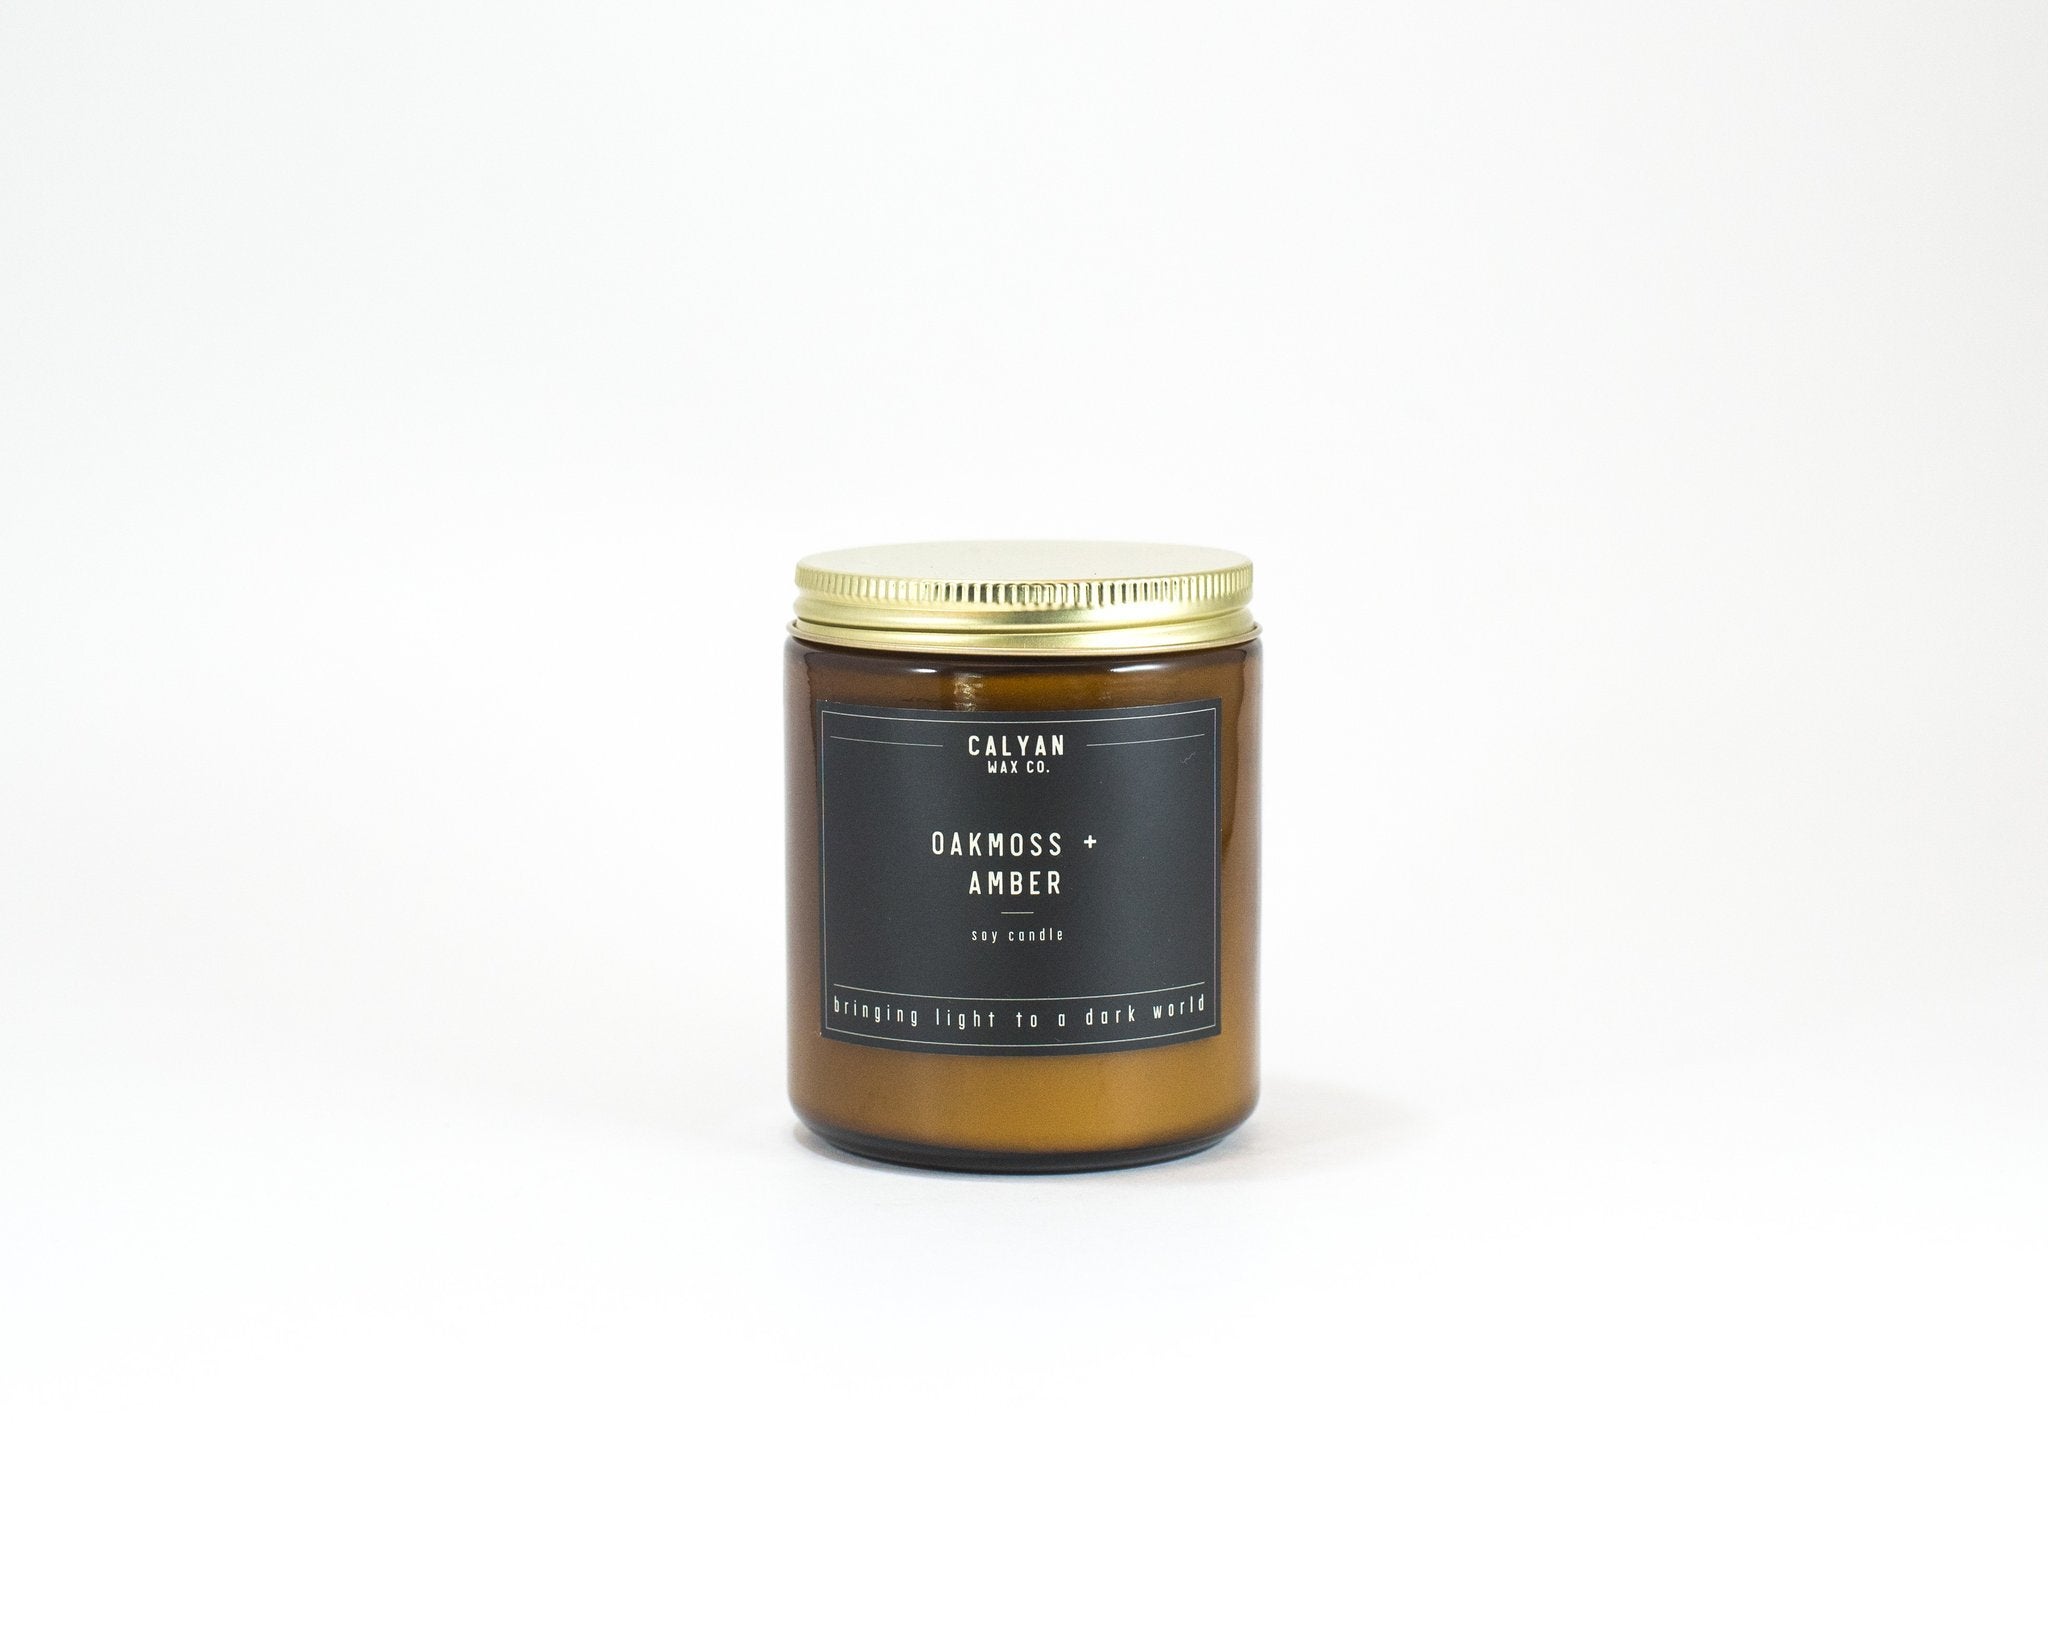 Oakmoss + Amber 7.2 oz. Amber Jar Soy Candle - Calyan Wax Co.